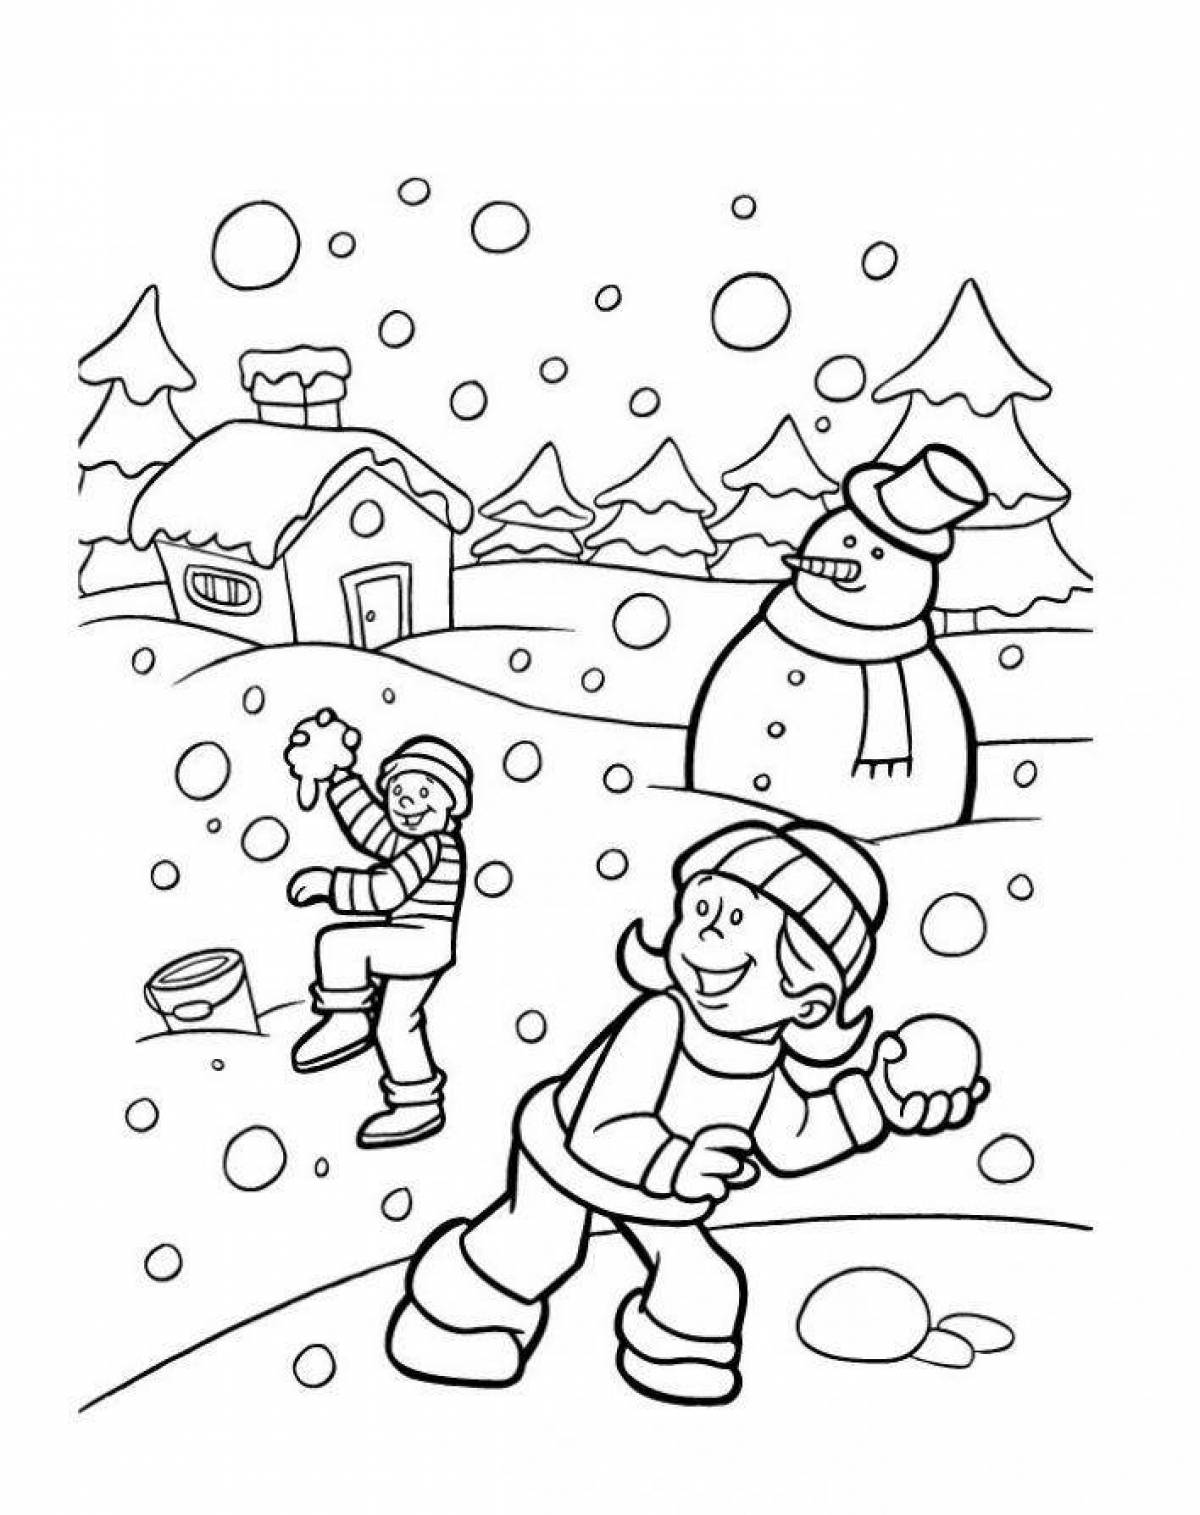 Happy snowfall coloring page